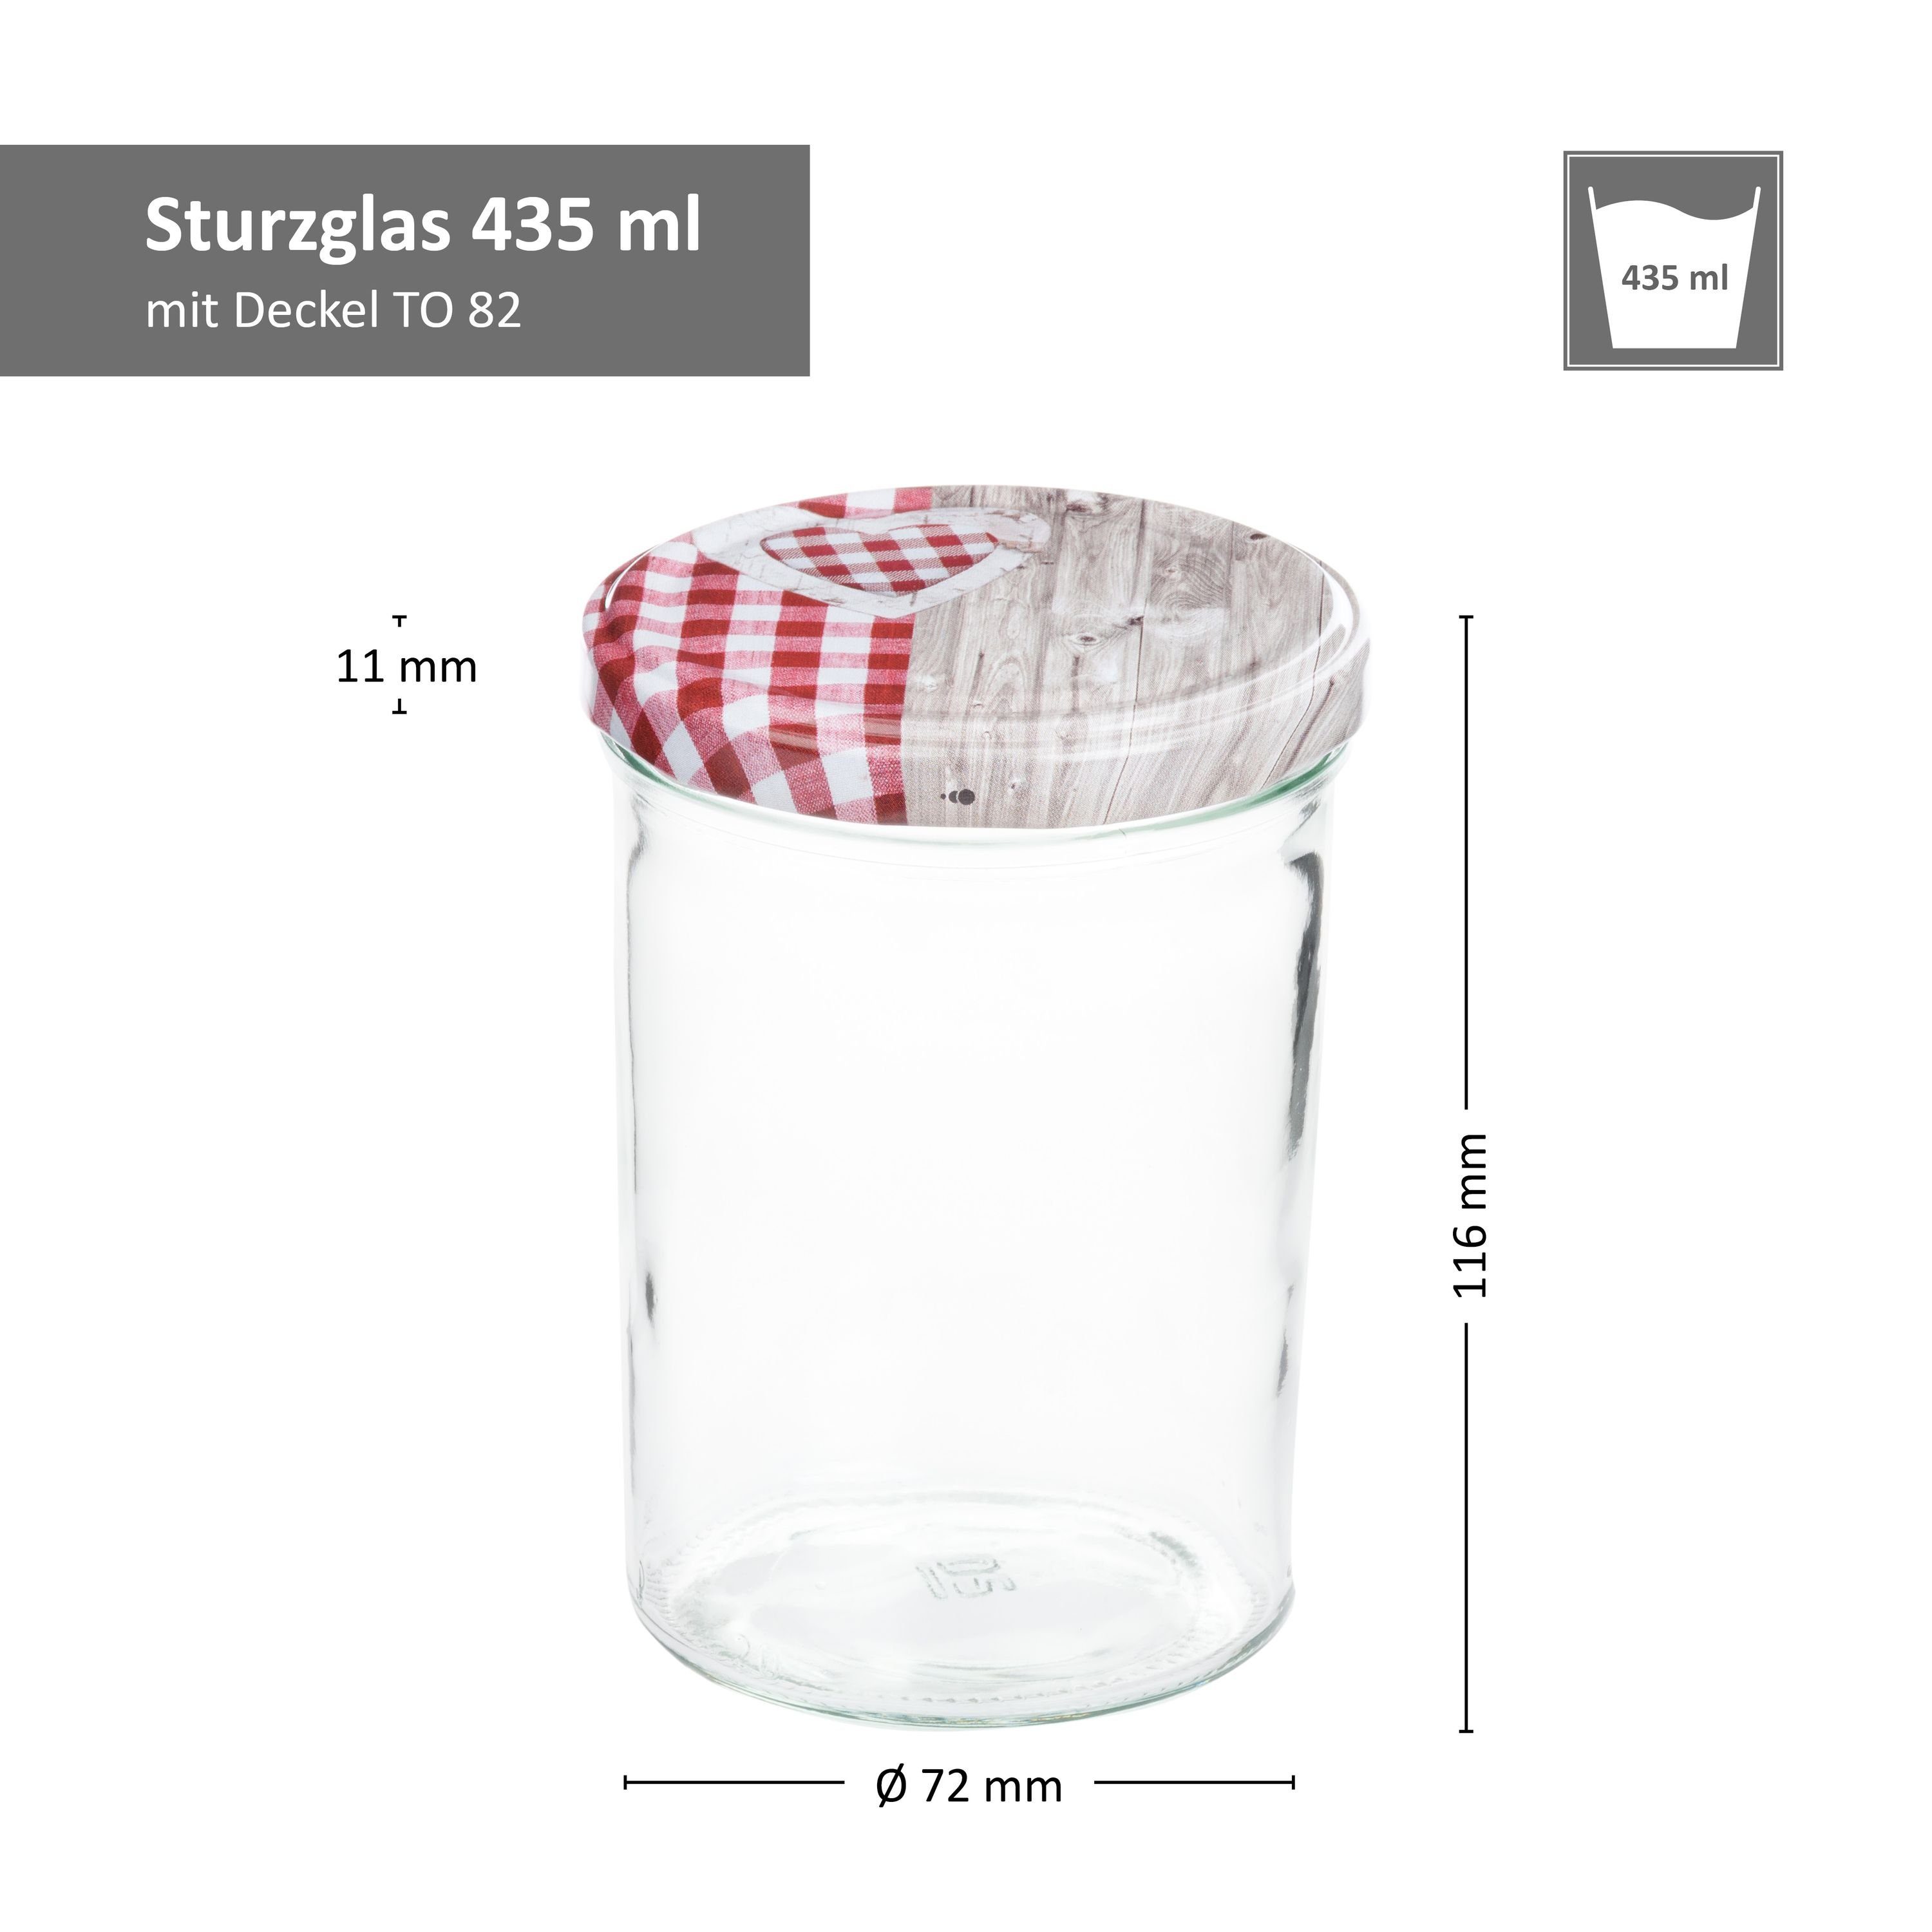 MamboCat Einmachglas 6er Set Sturzglas Rezeptheft, Holz To incl. rot 82 Deckel ml 435 Herz Glas